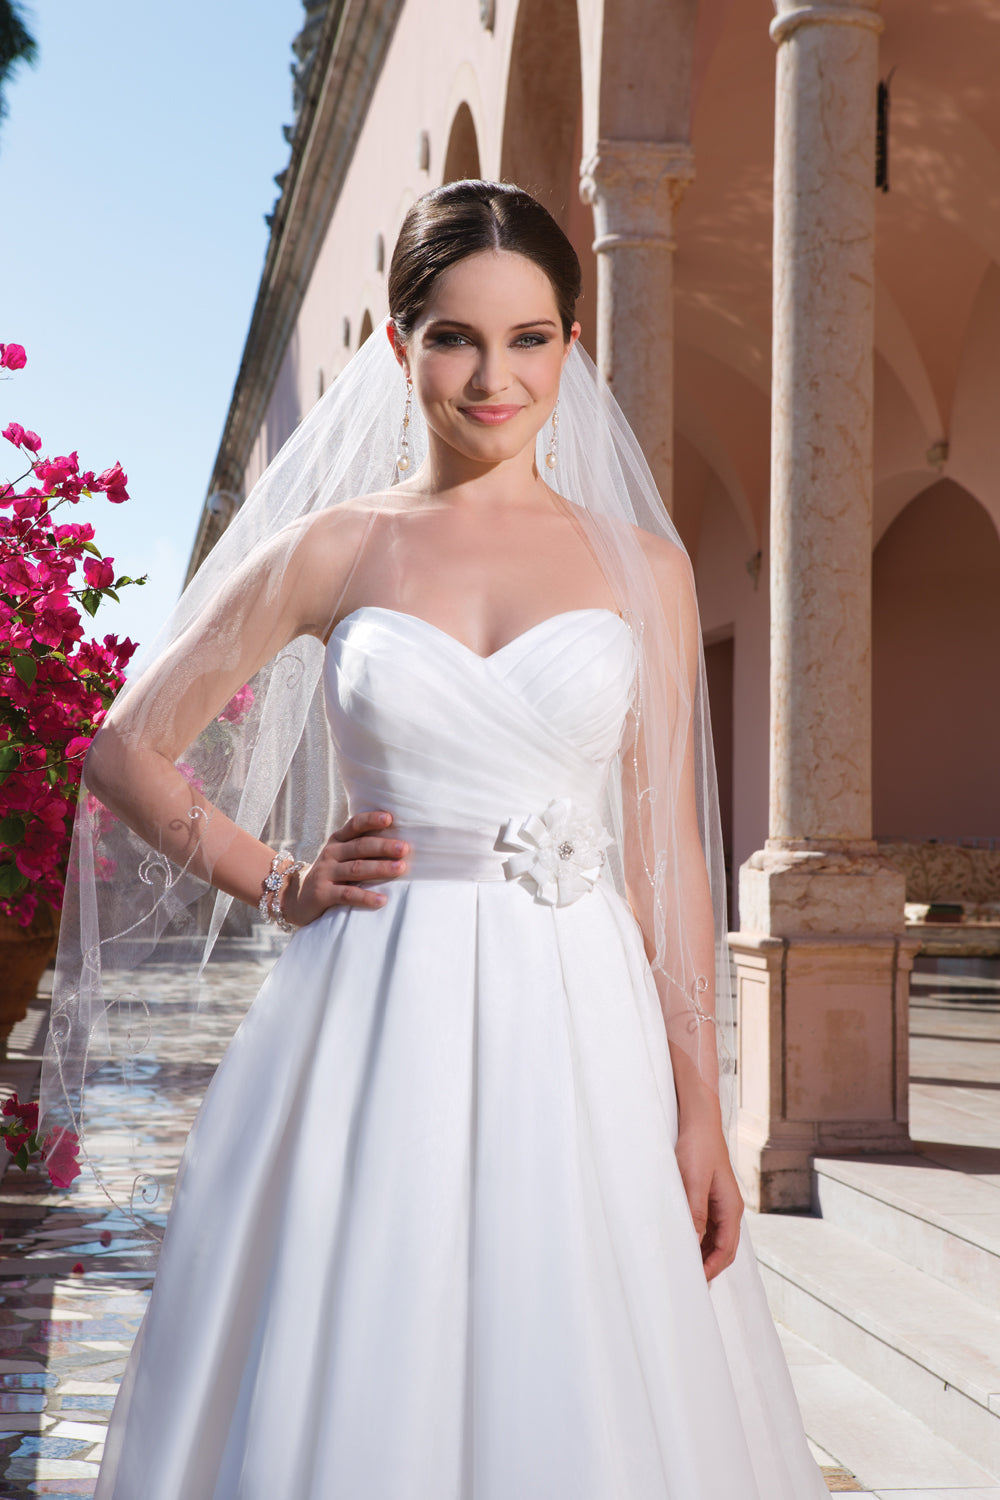 *NEW* Sweetheart Designer Wedding Gown - #6075